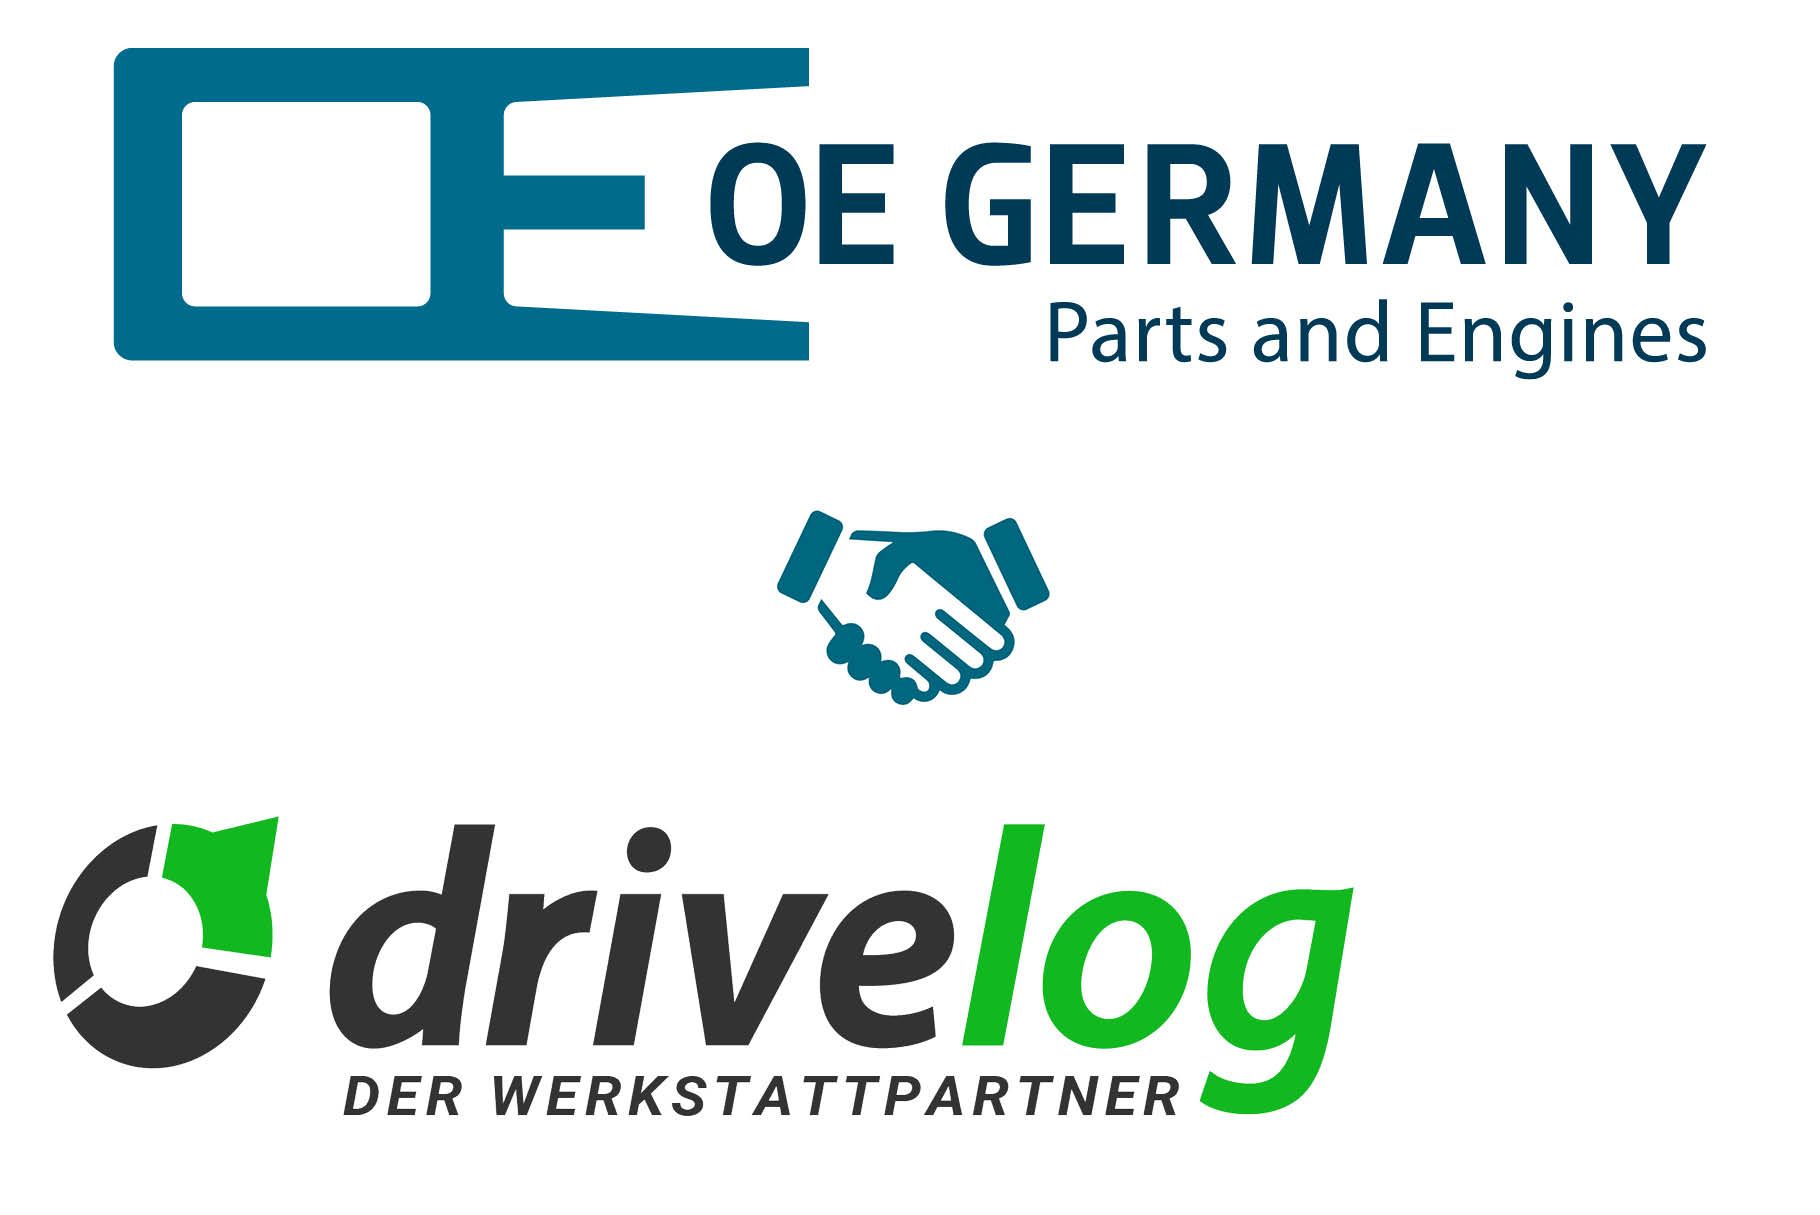 Partnership with drivelog